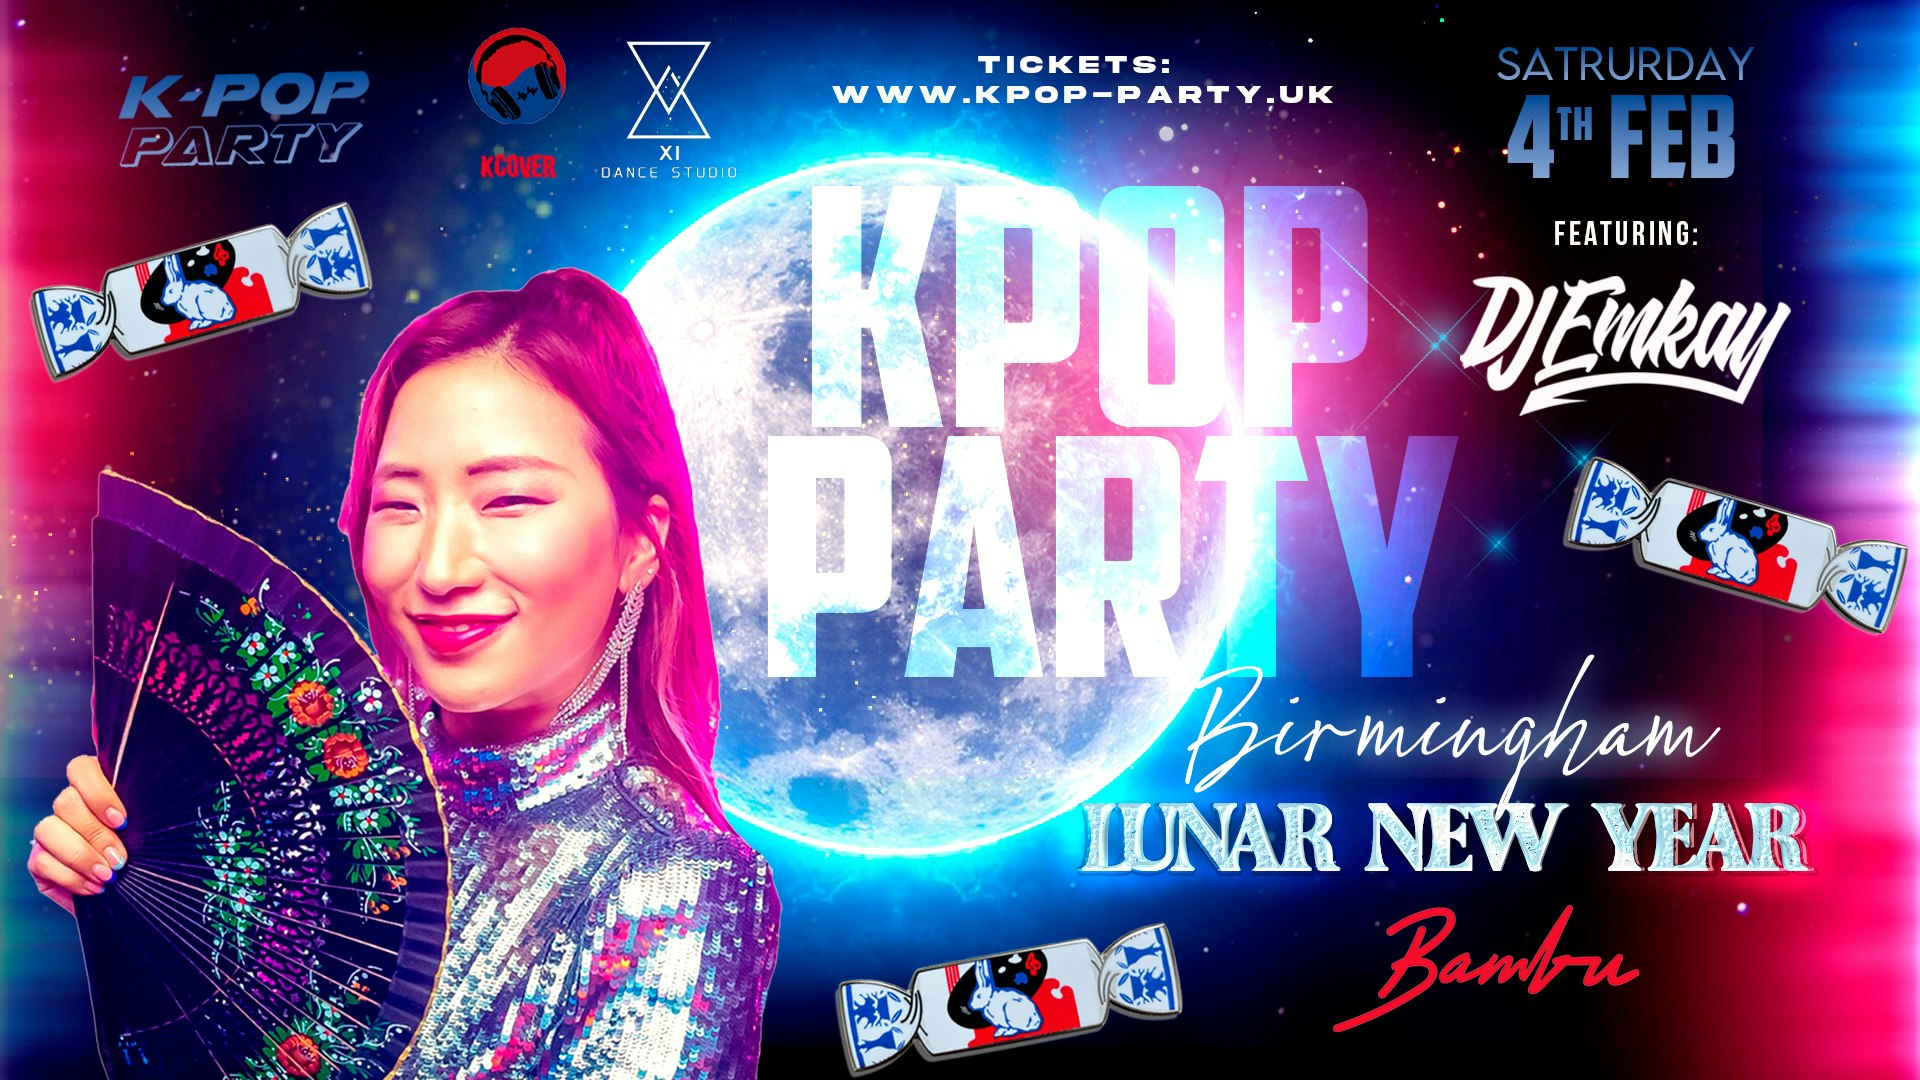 K-Pop Party Birmingham – LUNAR NEW YEAR with DJ EMKAY | Saturday 4th February